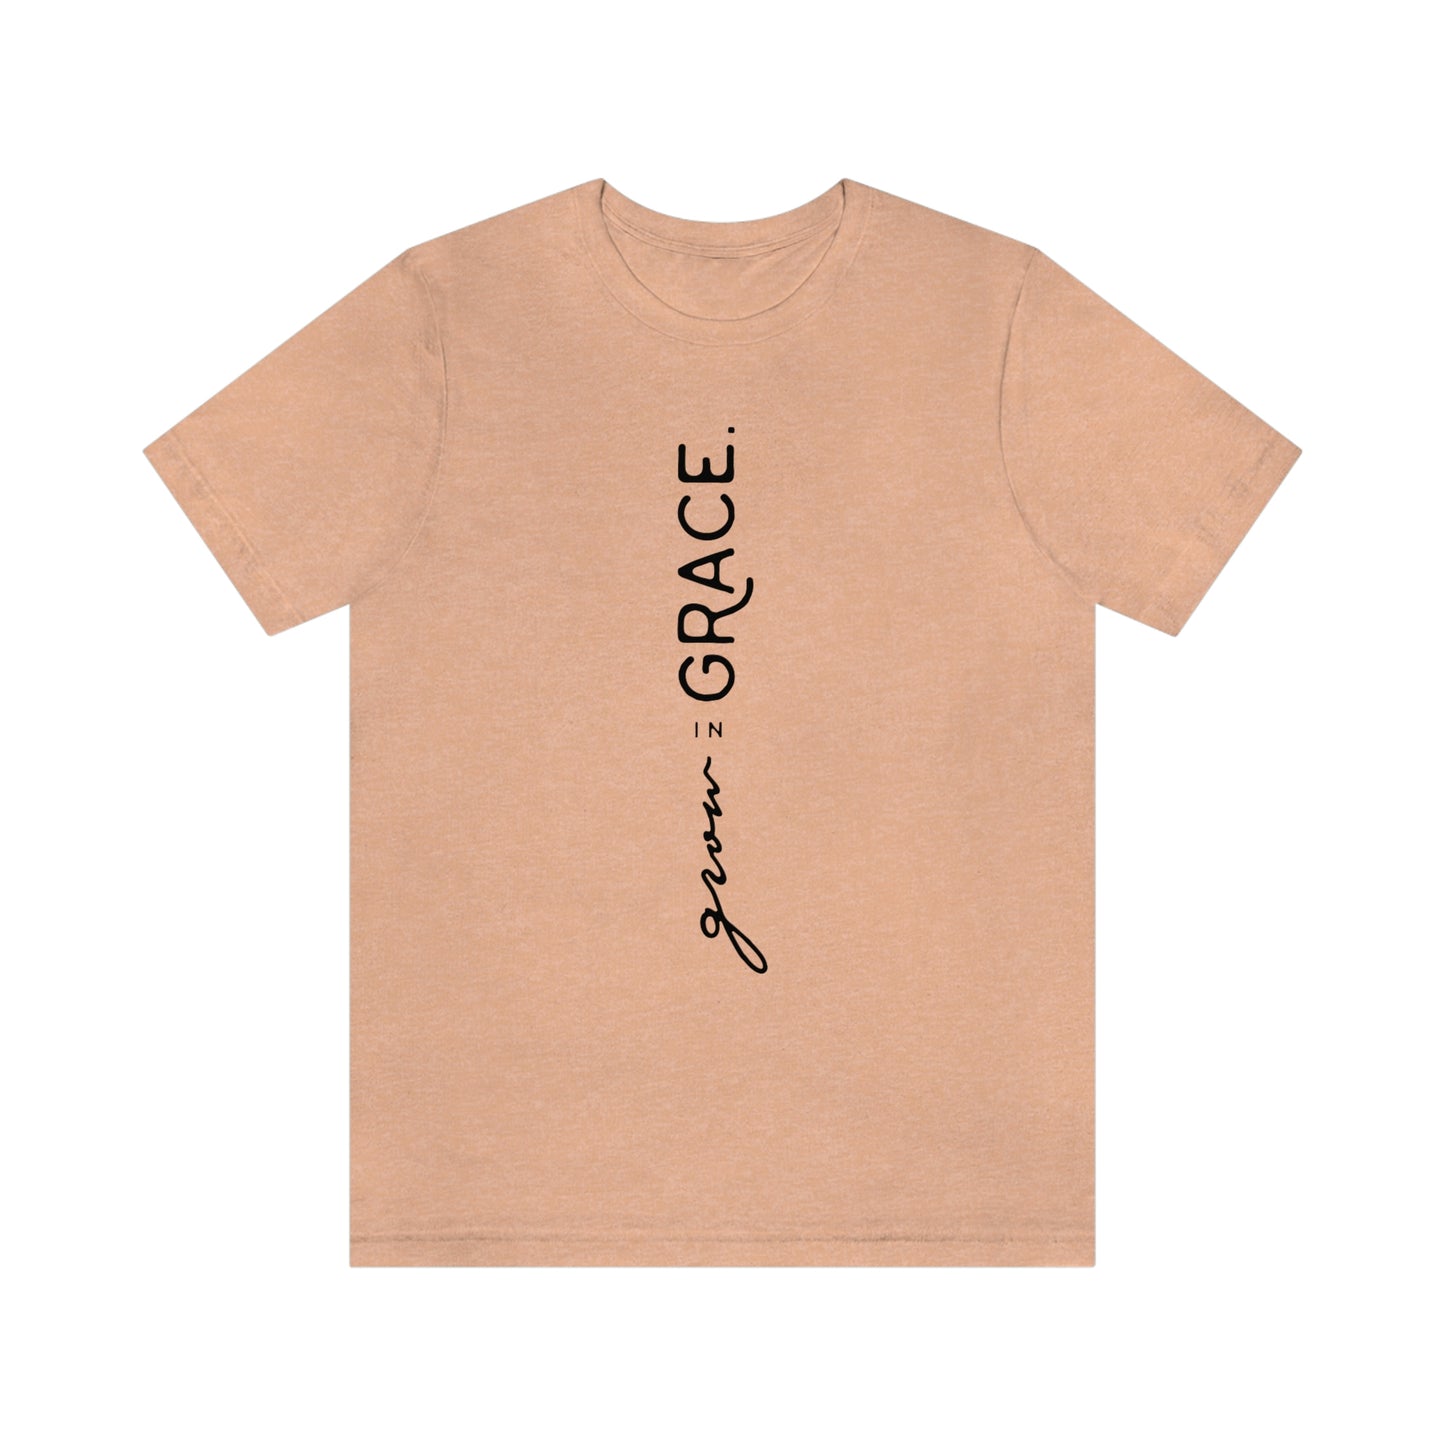 Grow In Grace T-Shirt